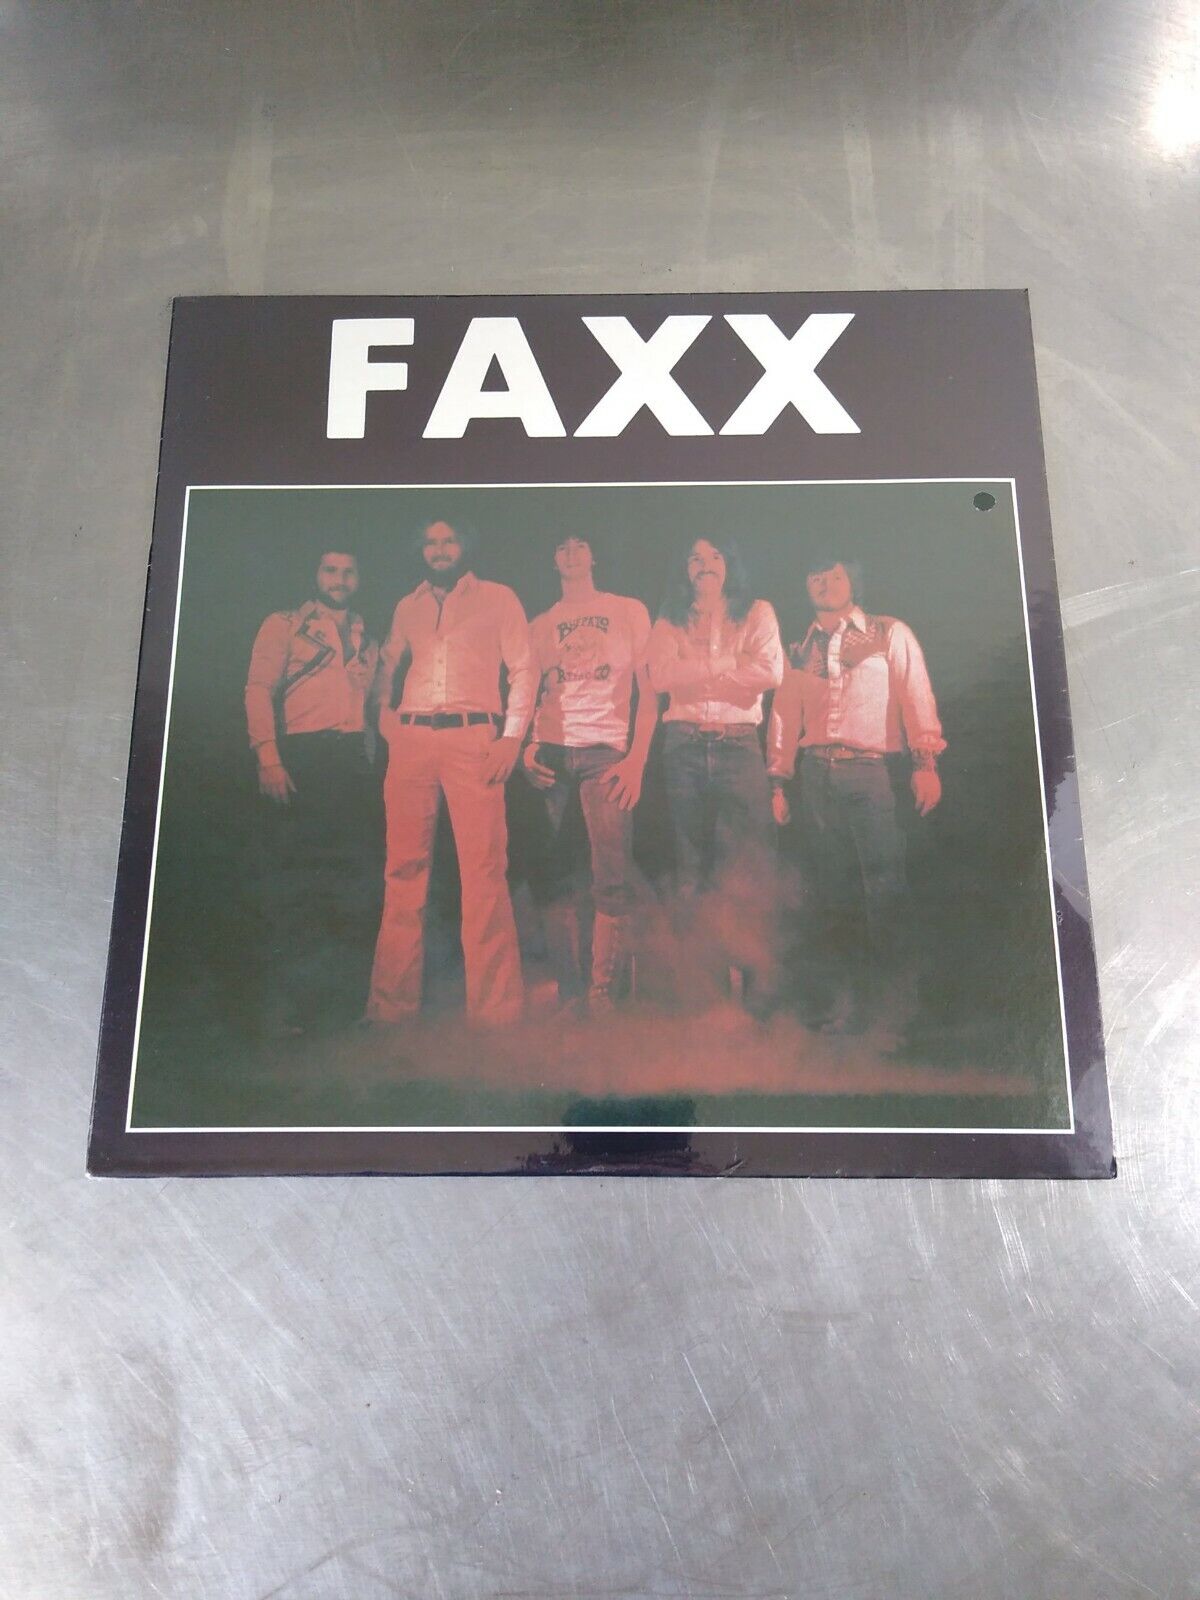 FAXX - FAXX 1971 LOCAL ARKANSAS HARD ROCK SOUTHERN ROCK ORIGINAL SEALED PR ALBUM